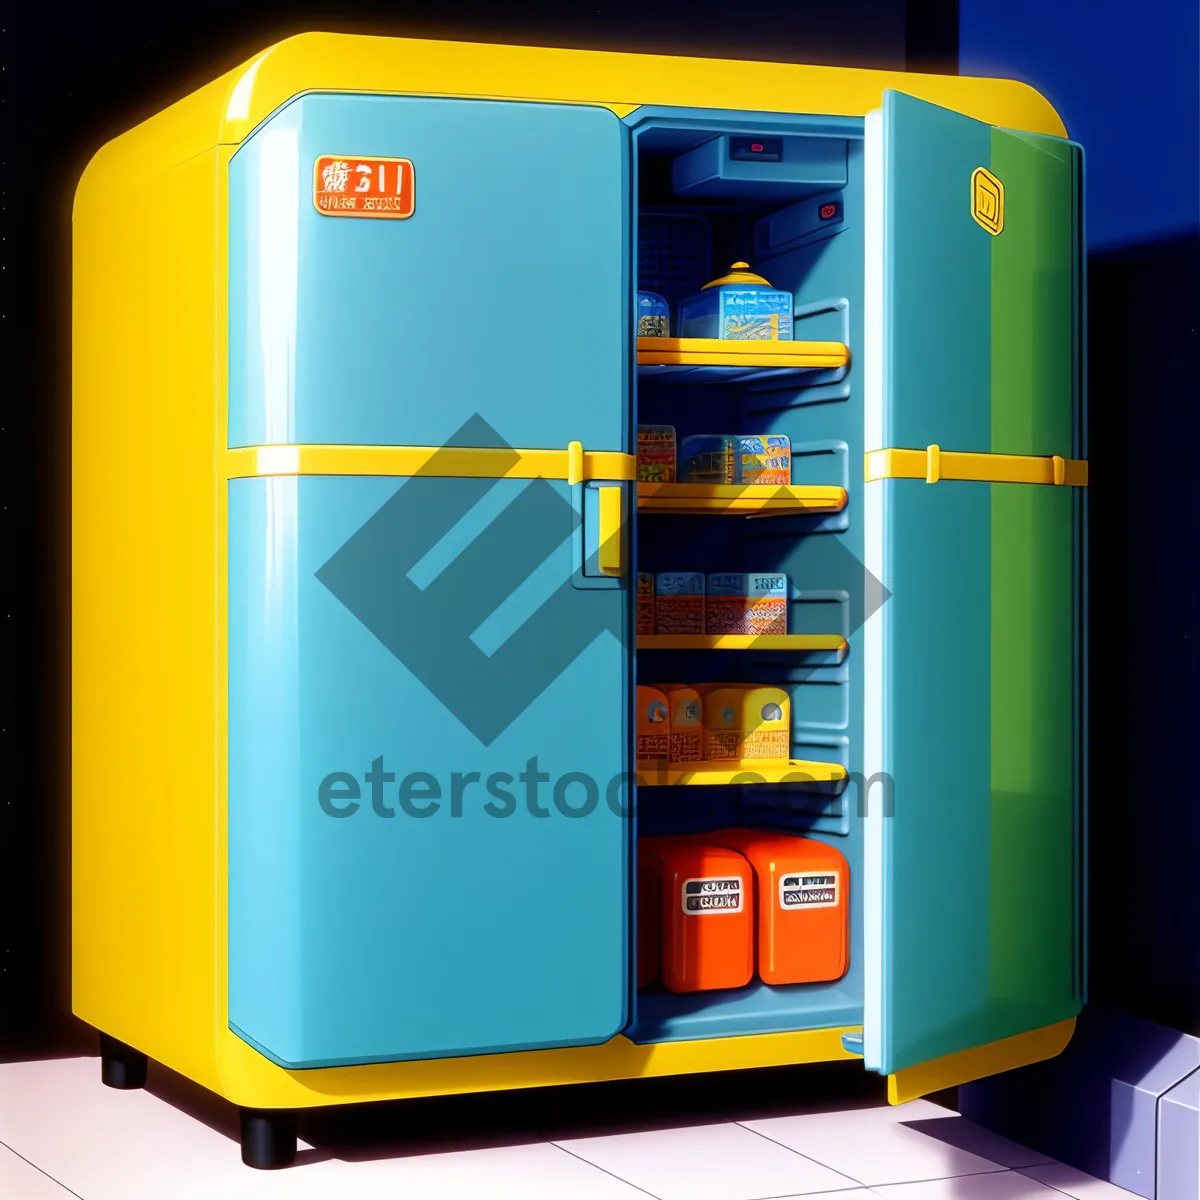 Picture of Versatile Storage Locker for Efficient Business Data Management